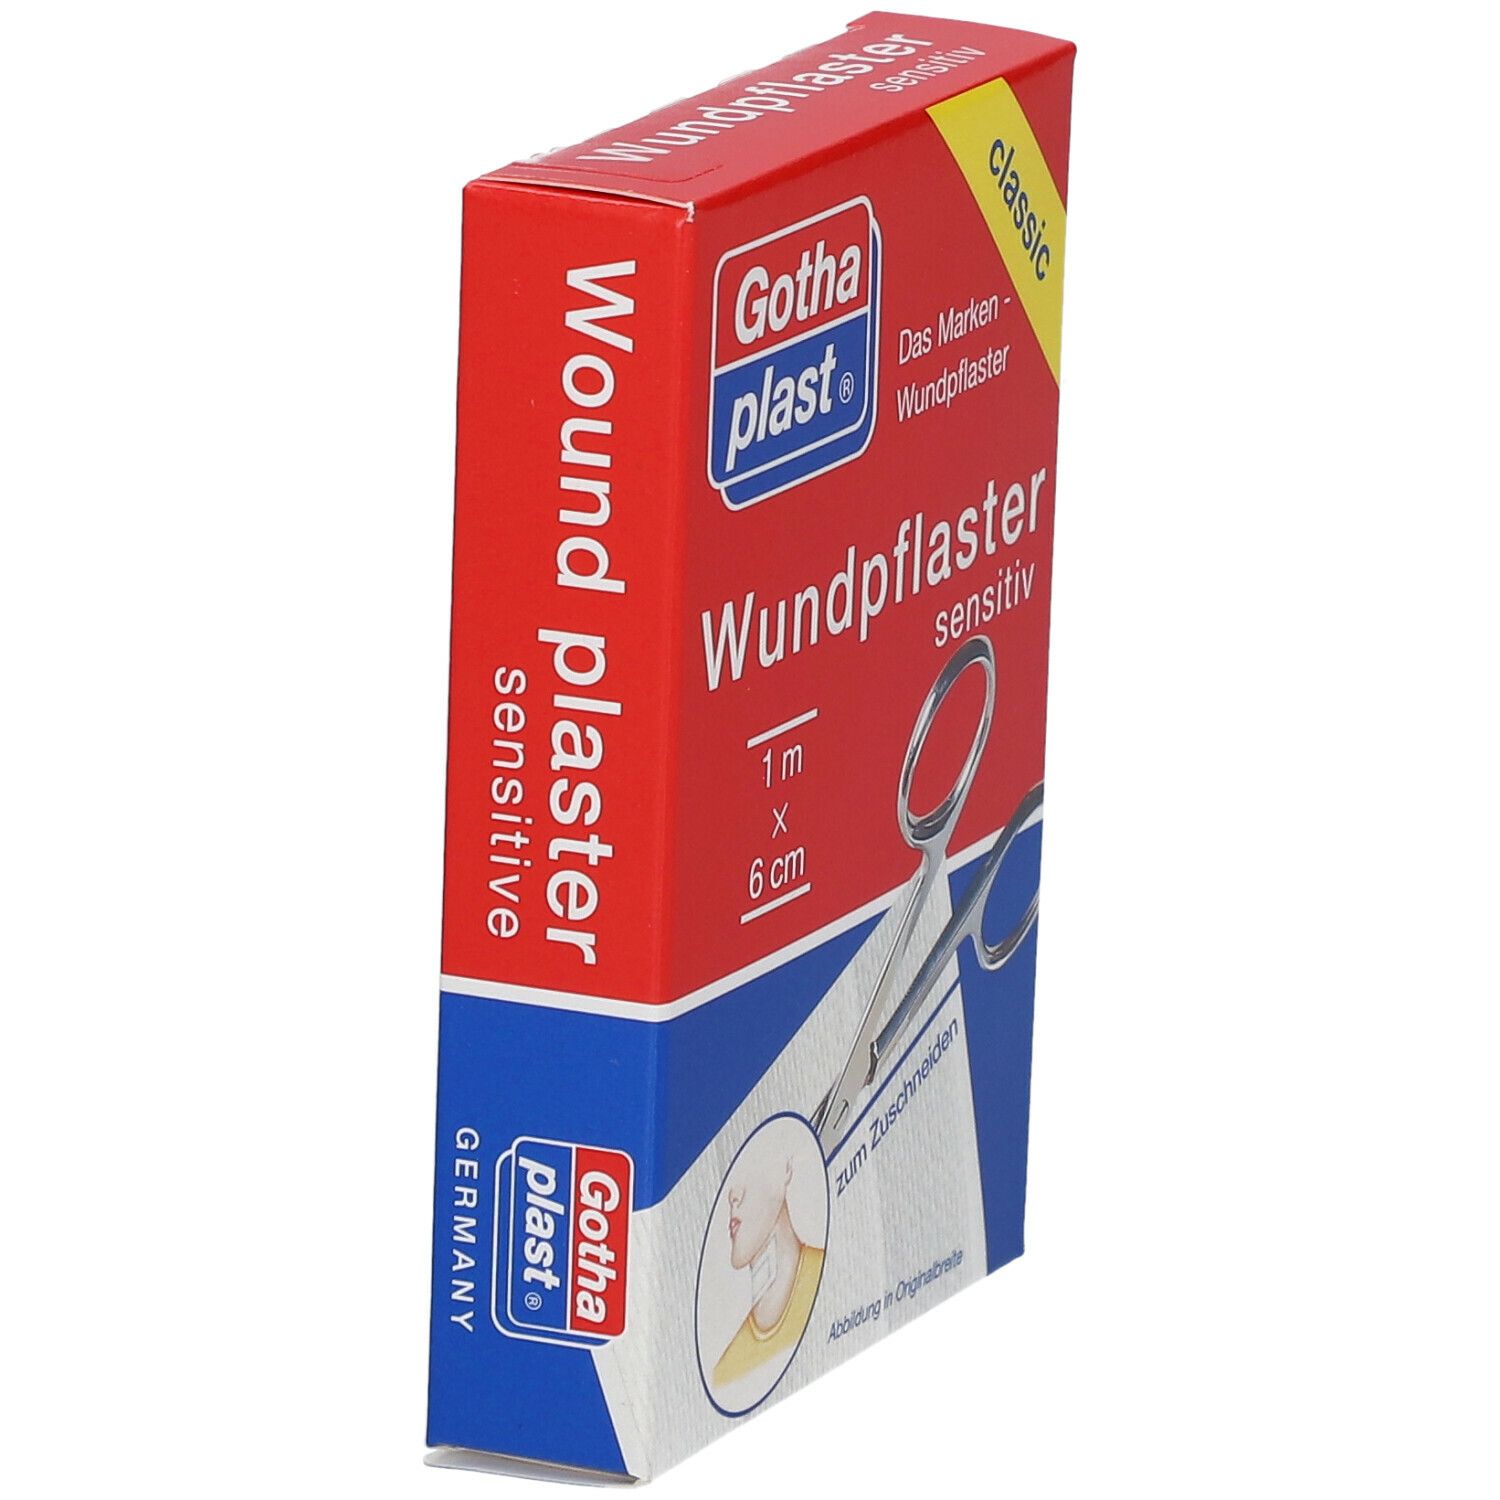 Gothaplast® Wundpflaster sensitiv 1 cm x 6 cm 1 St - SHOP APOTHEKE